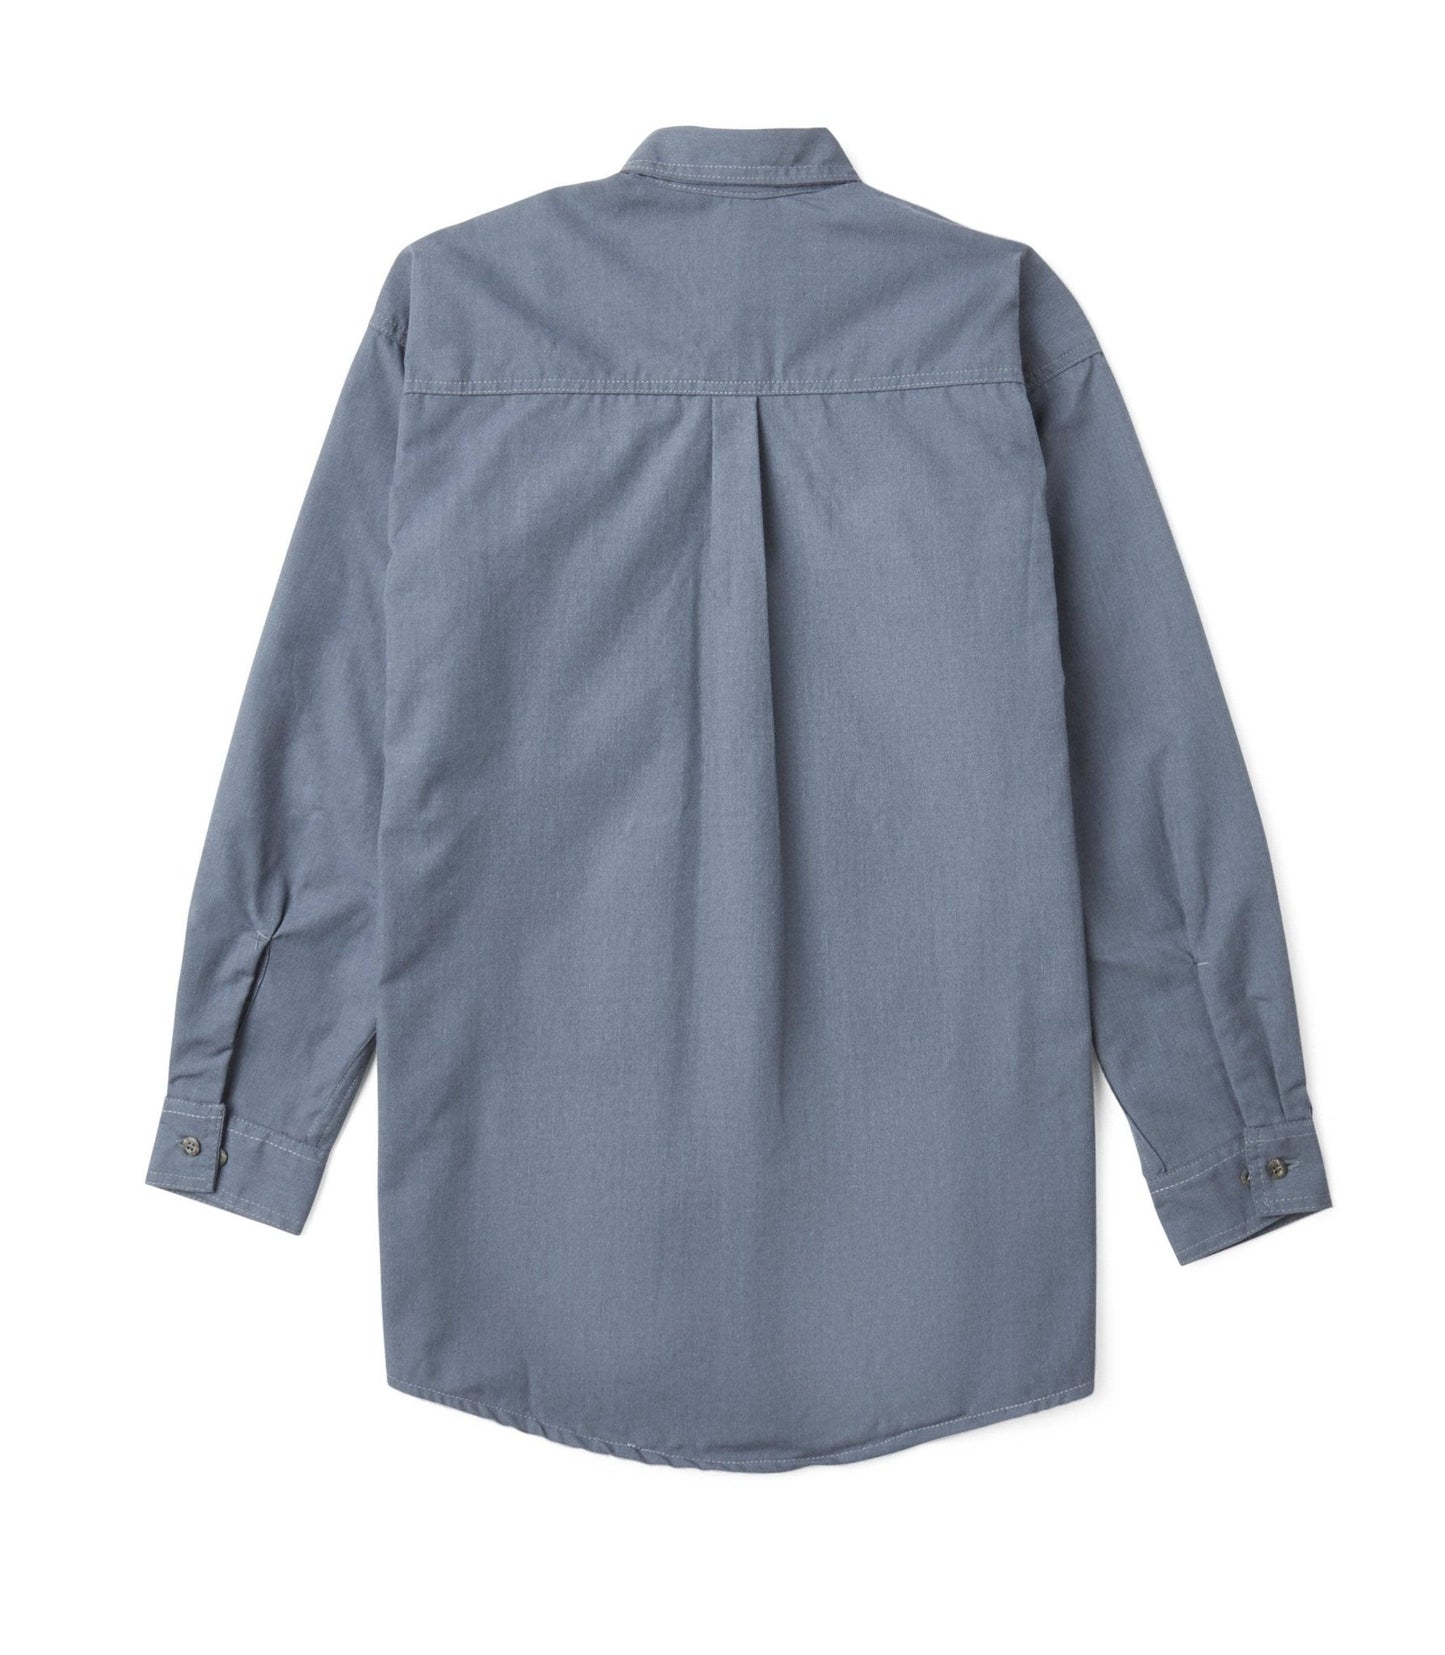 FR Women's 88/12 Uniform Shirt - Gray - Rasco FR